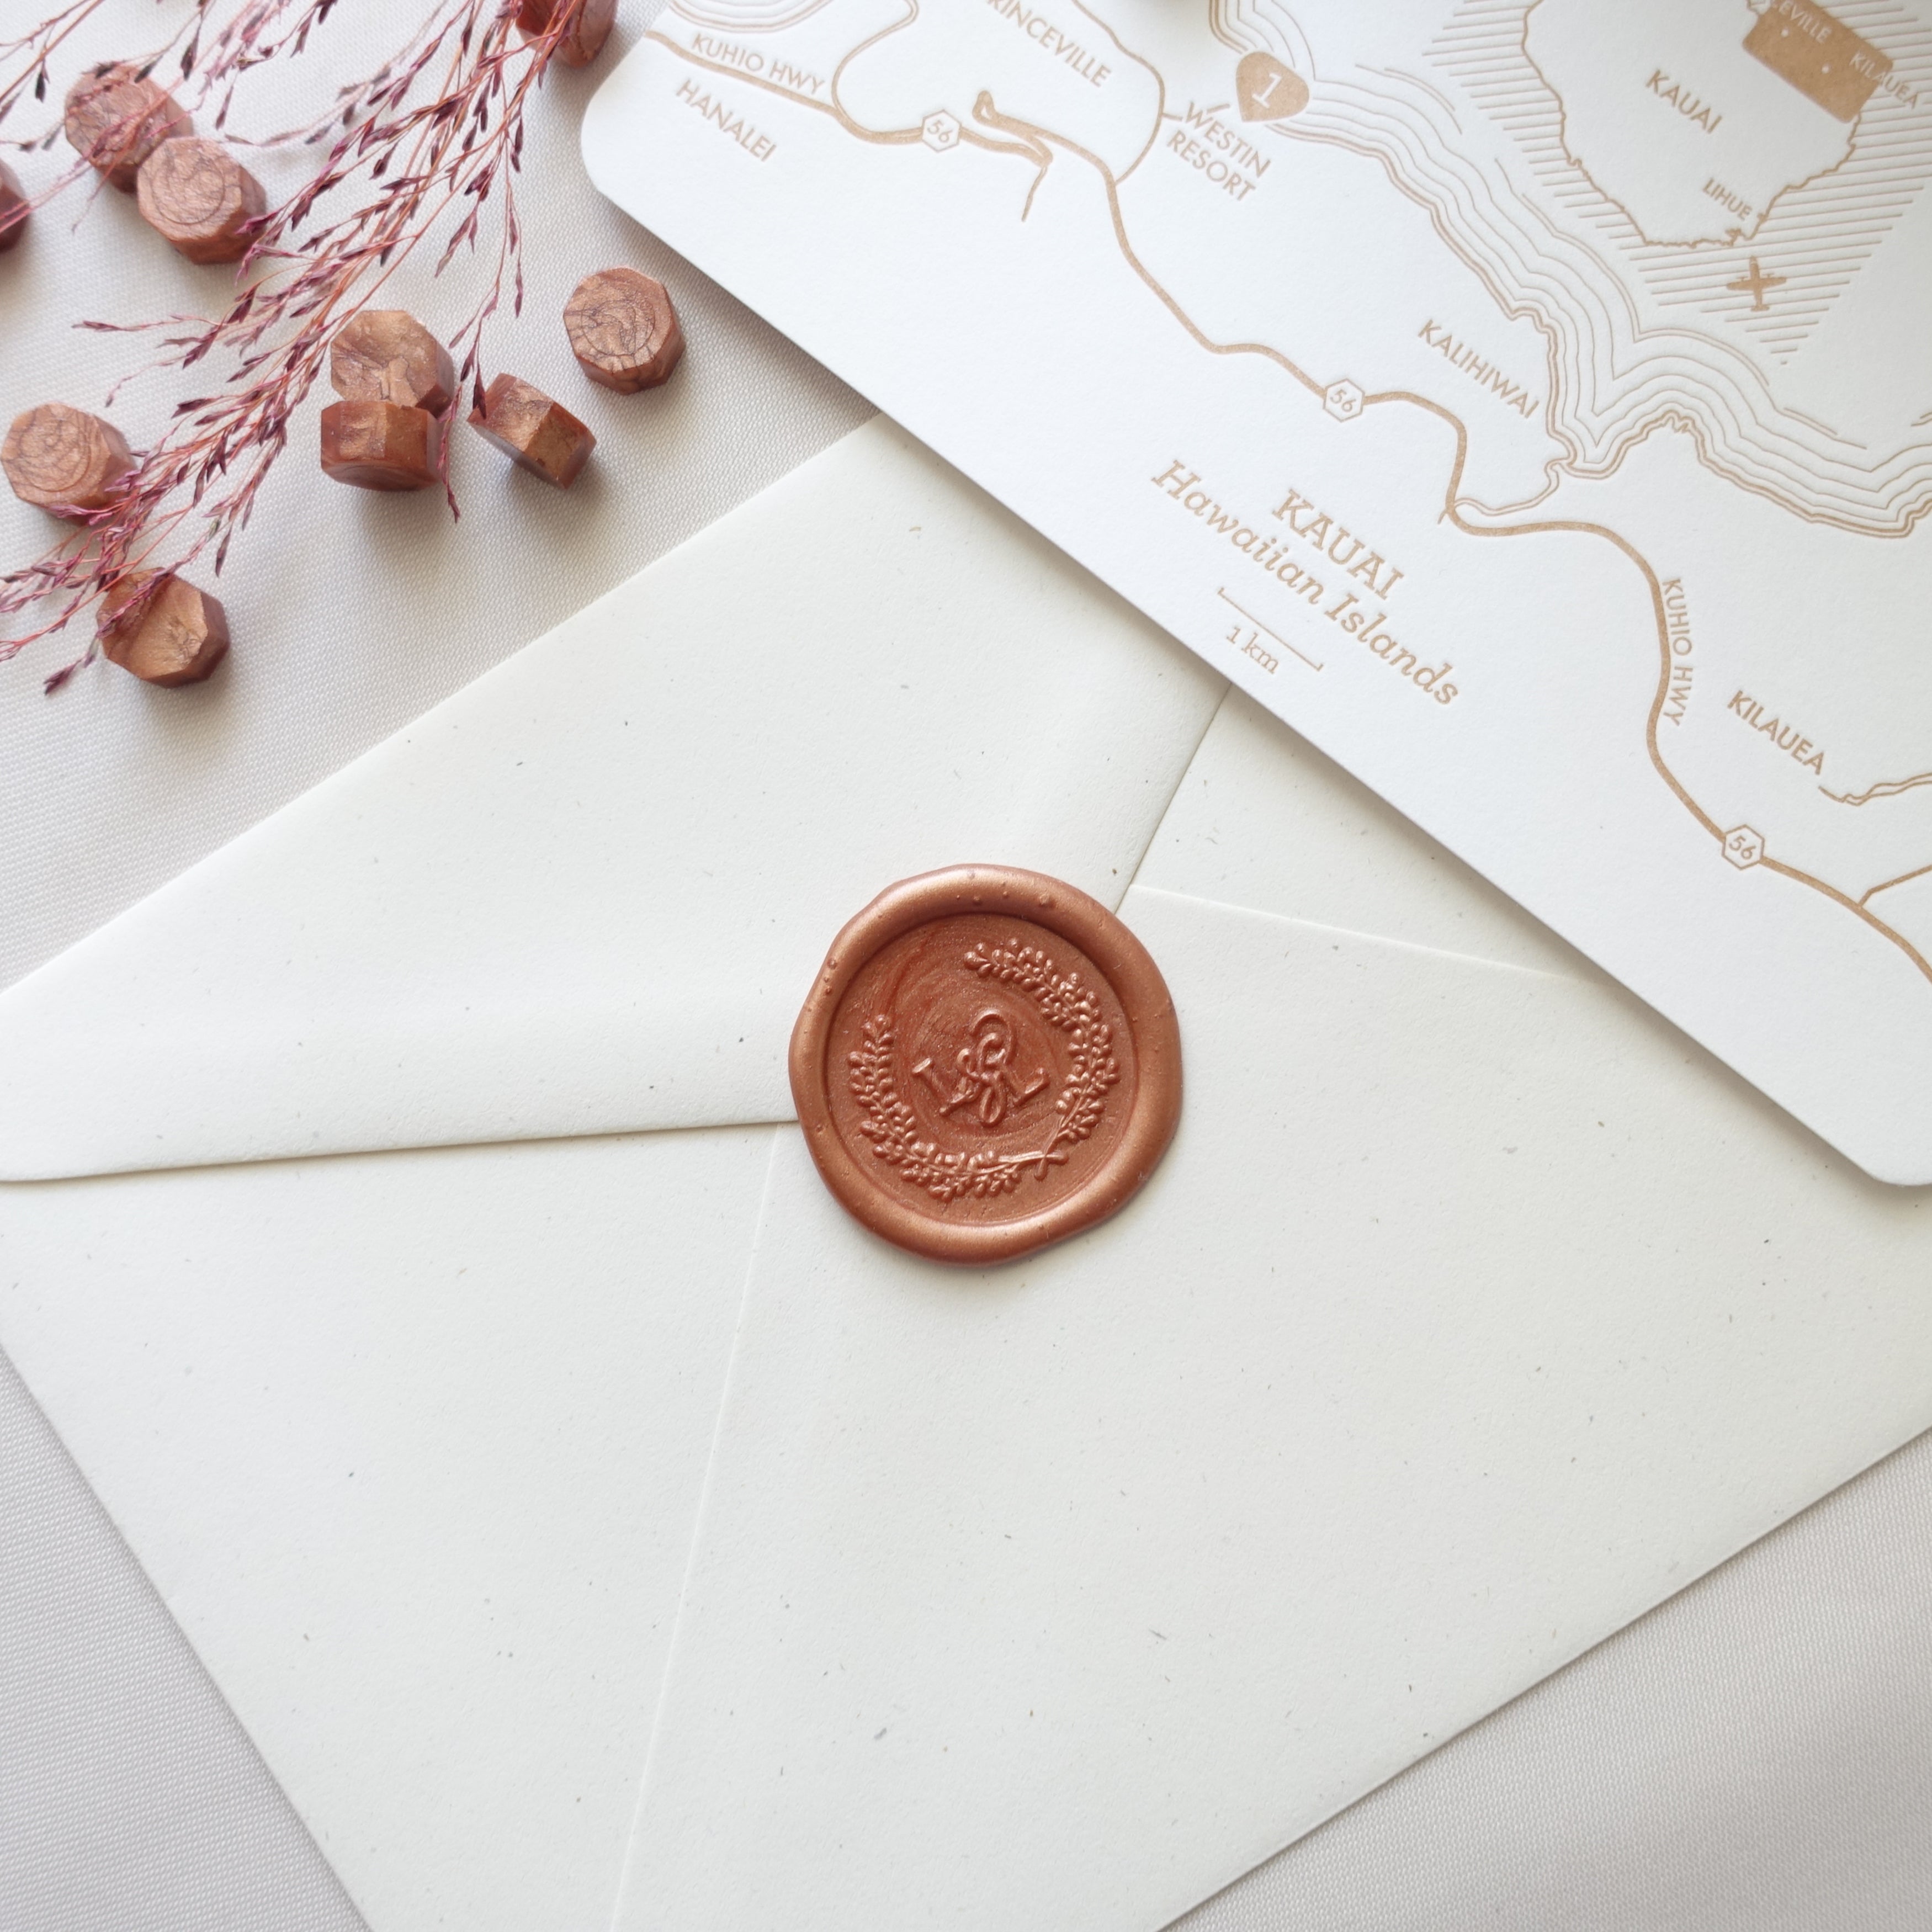 Peach copper wedding invitation envelope sealing wax beads with wreath wedding monogram custom wax seal Australia